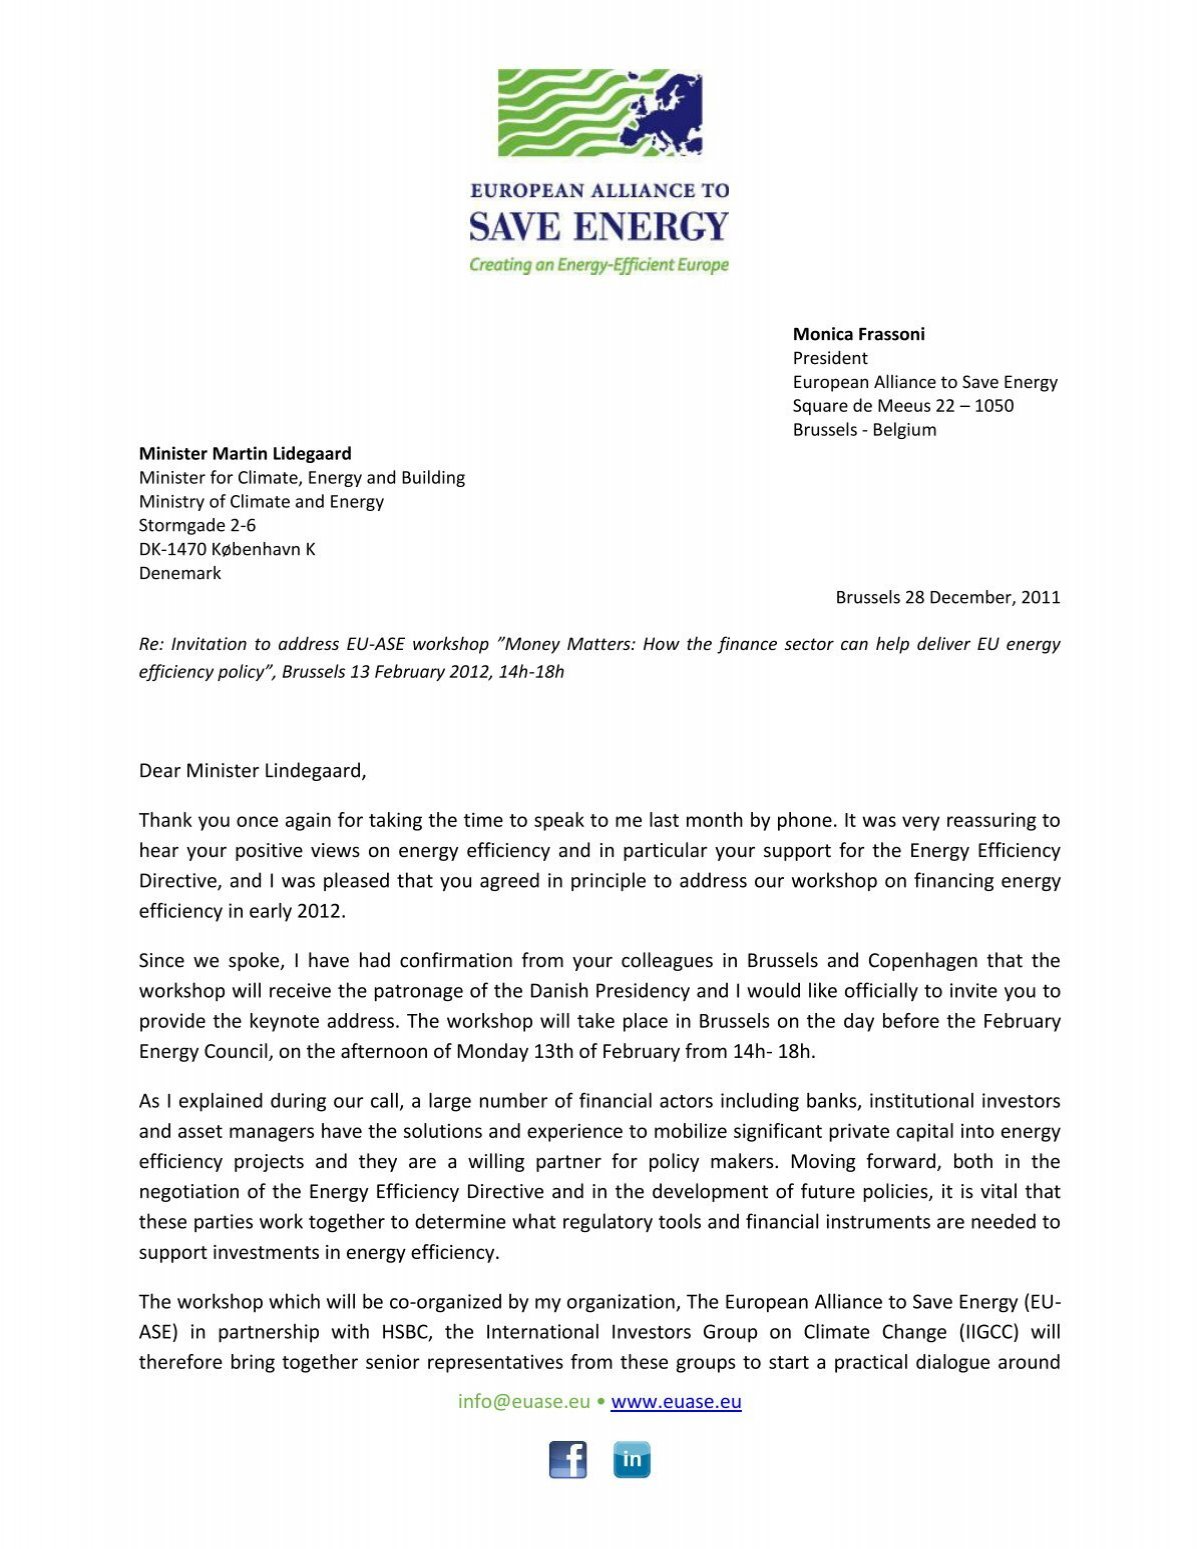 Letter to the Danish Minister Lidegaard: invitation to address EU